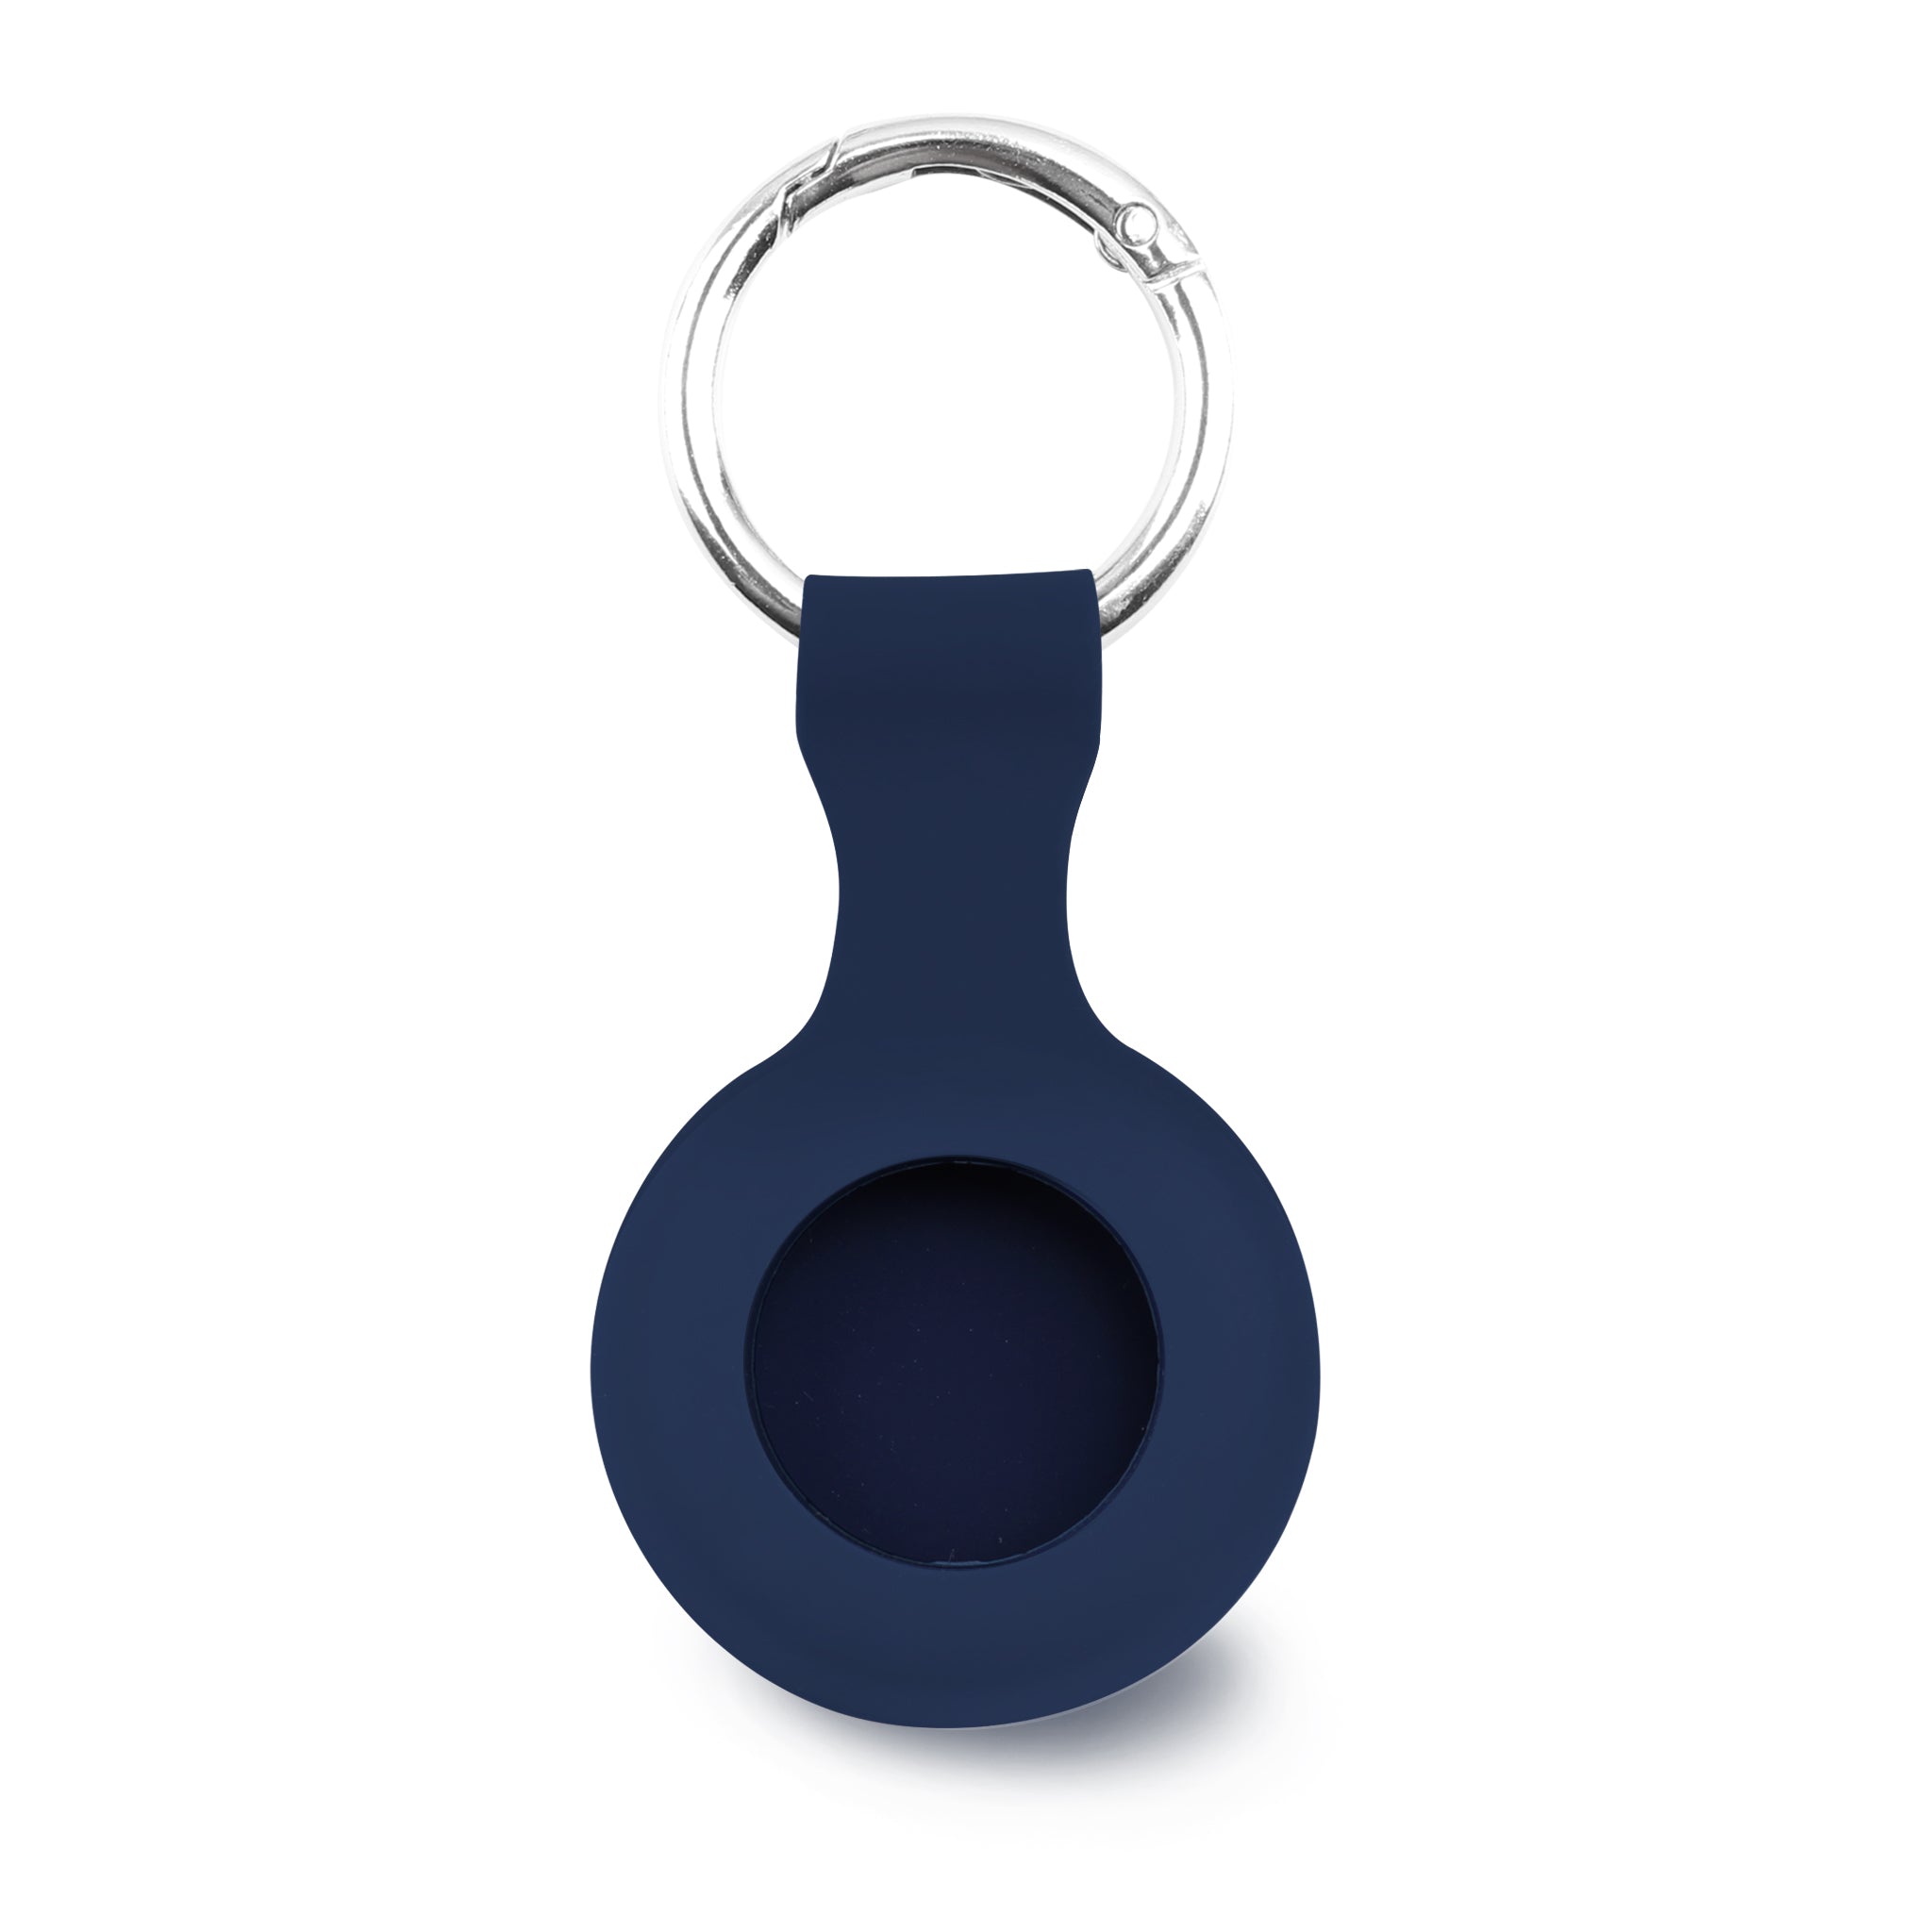 Neavy blue tiny key ring  Key rings, Rings, Keychain